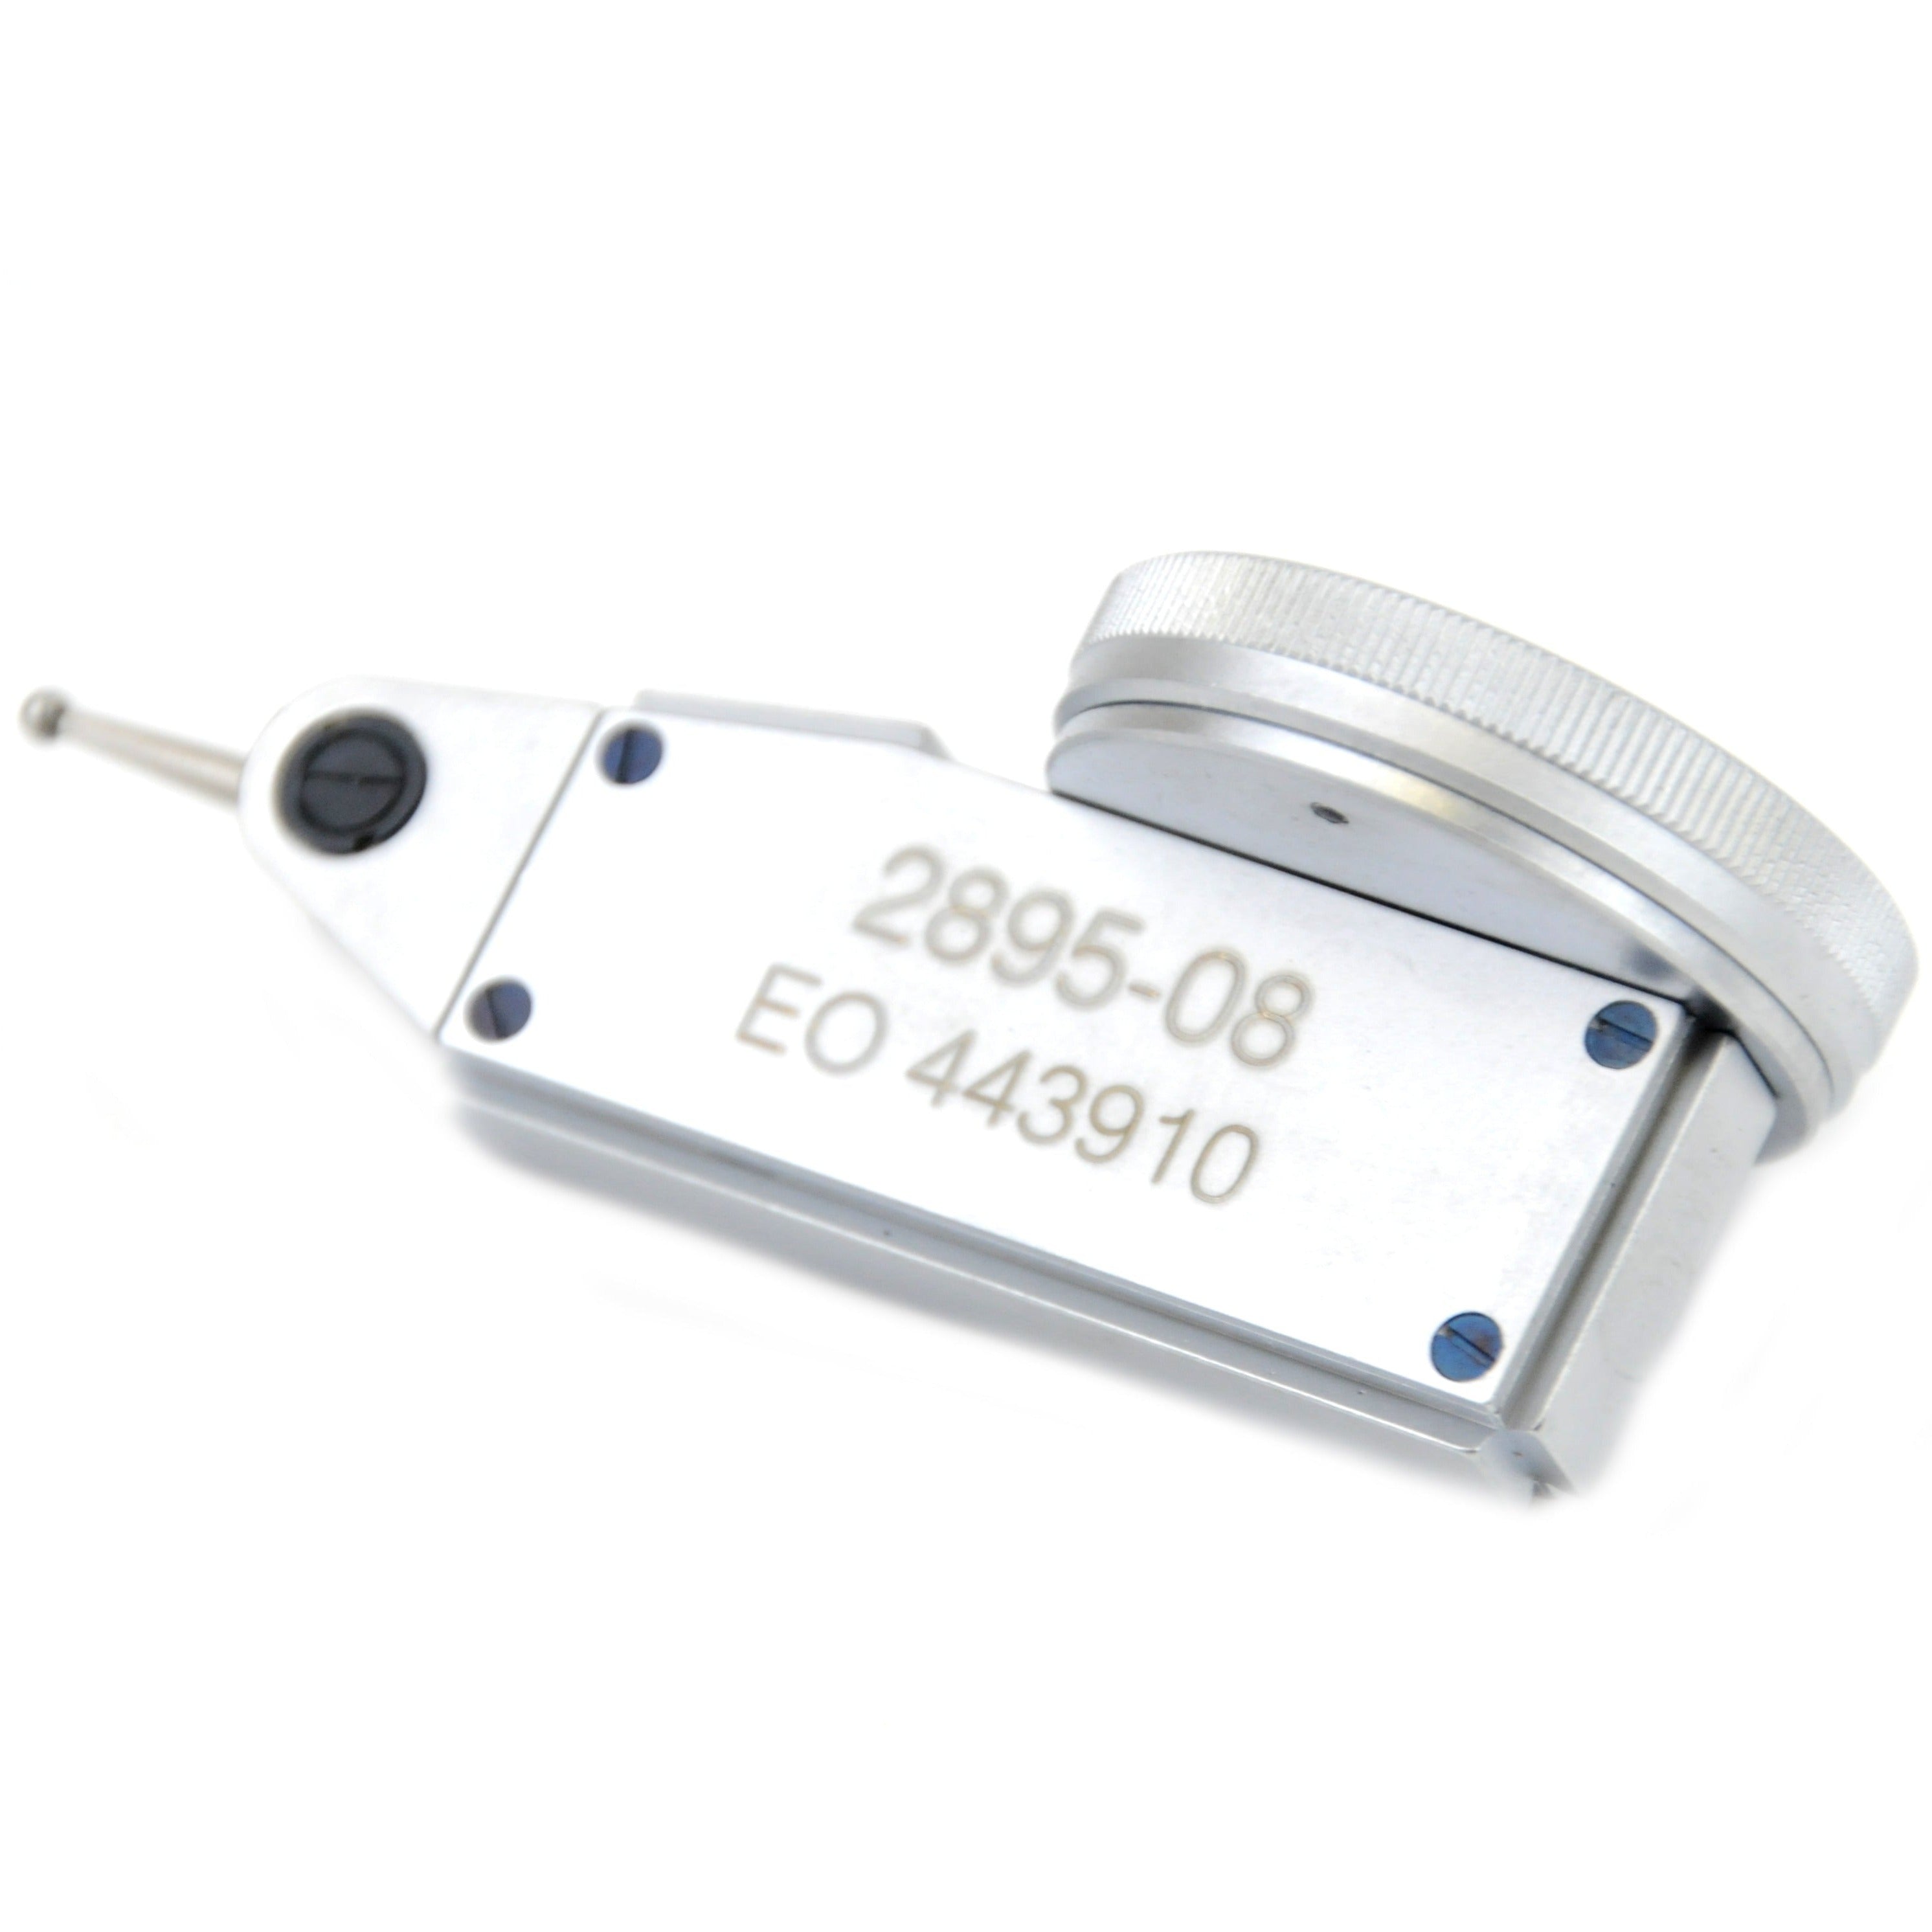 Insize Dial Test Indicator 0.8mm Range Series 2895-08